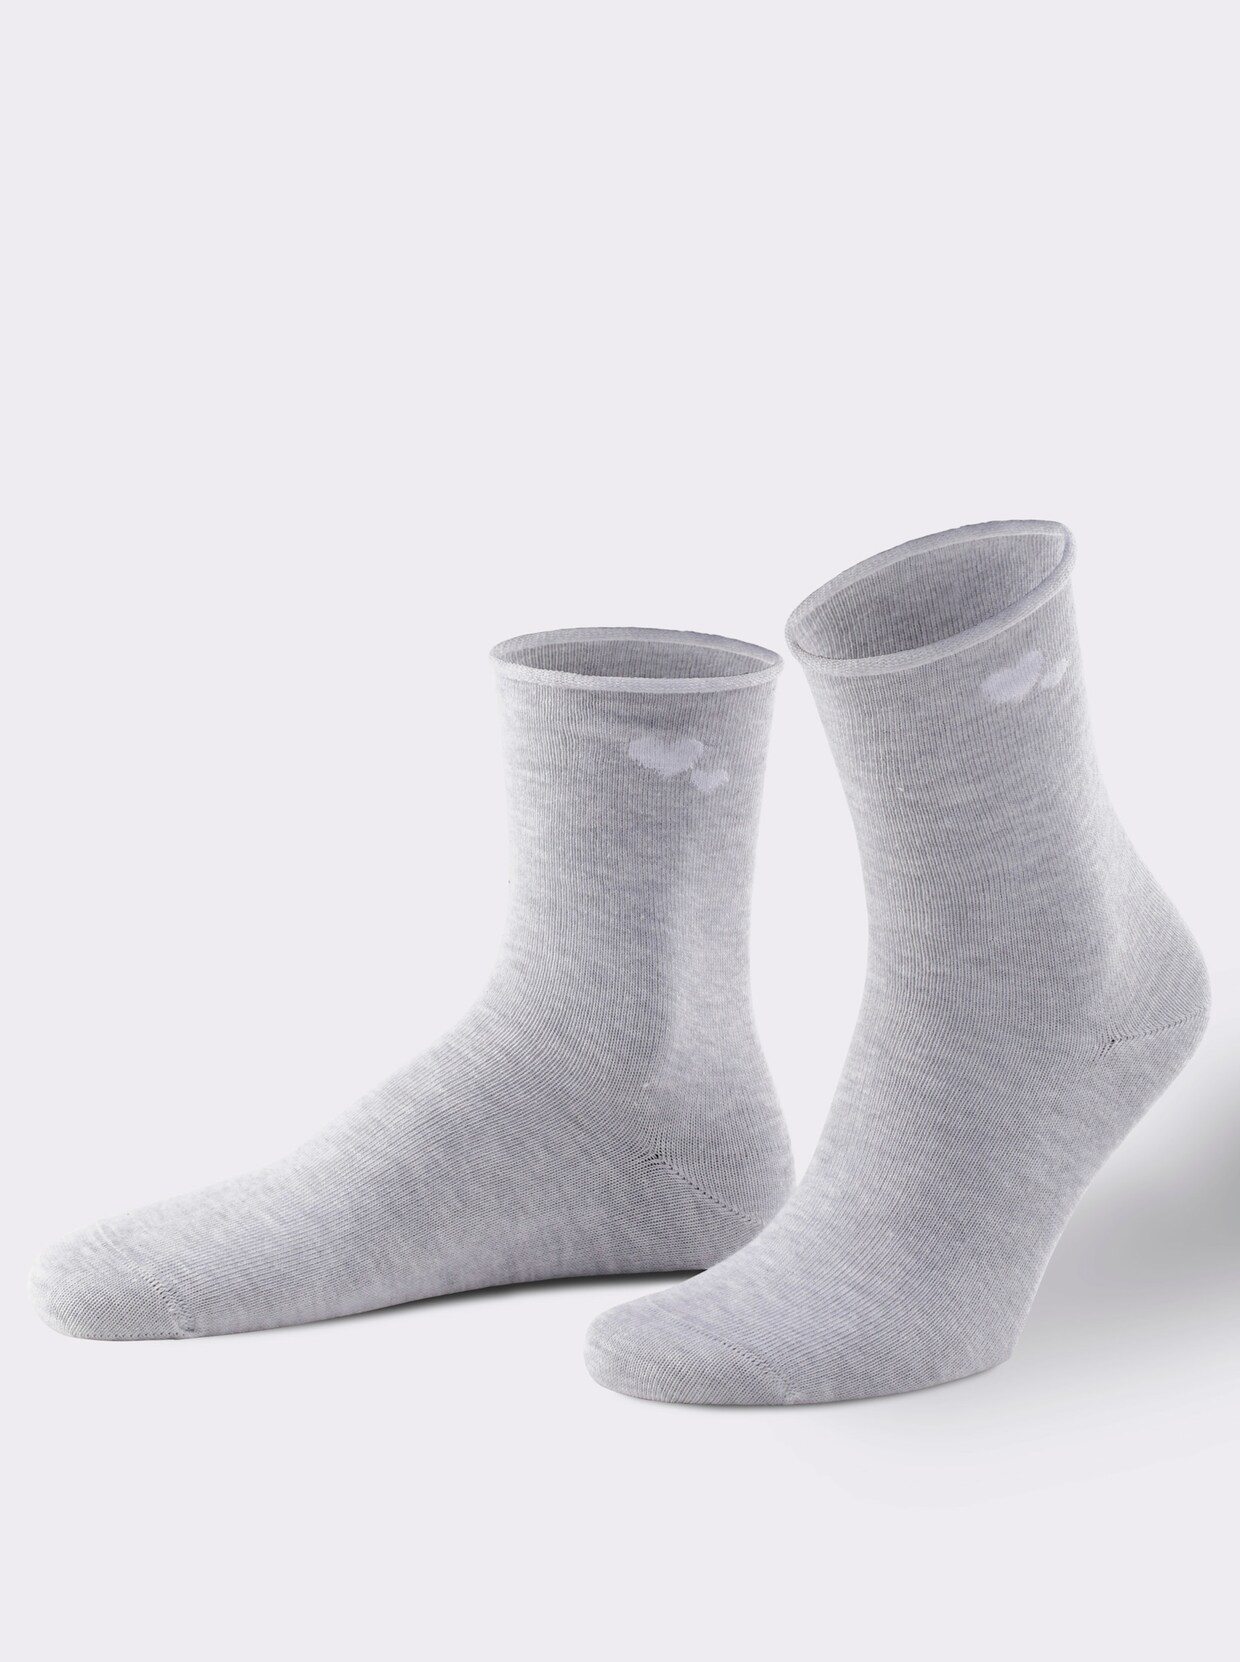 wäschepur Damen-Socken - farbig-sortiert